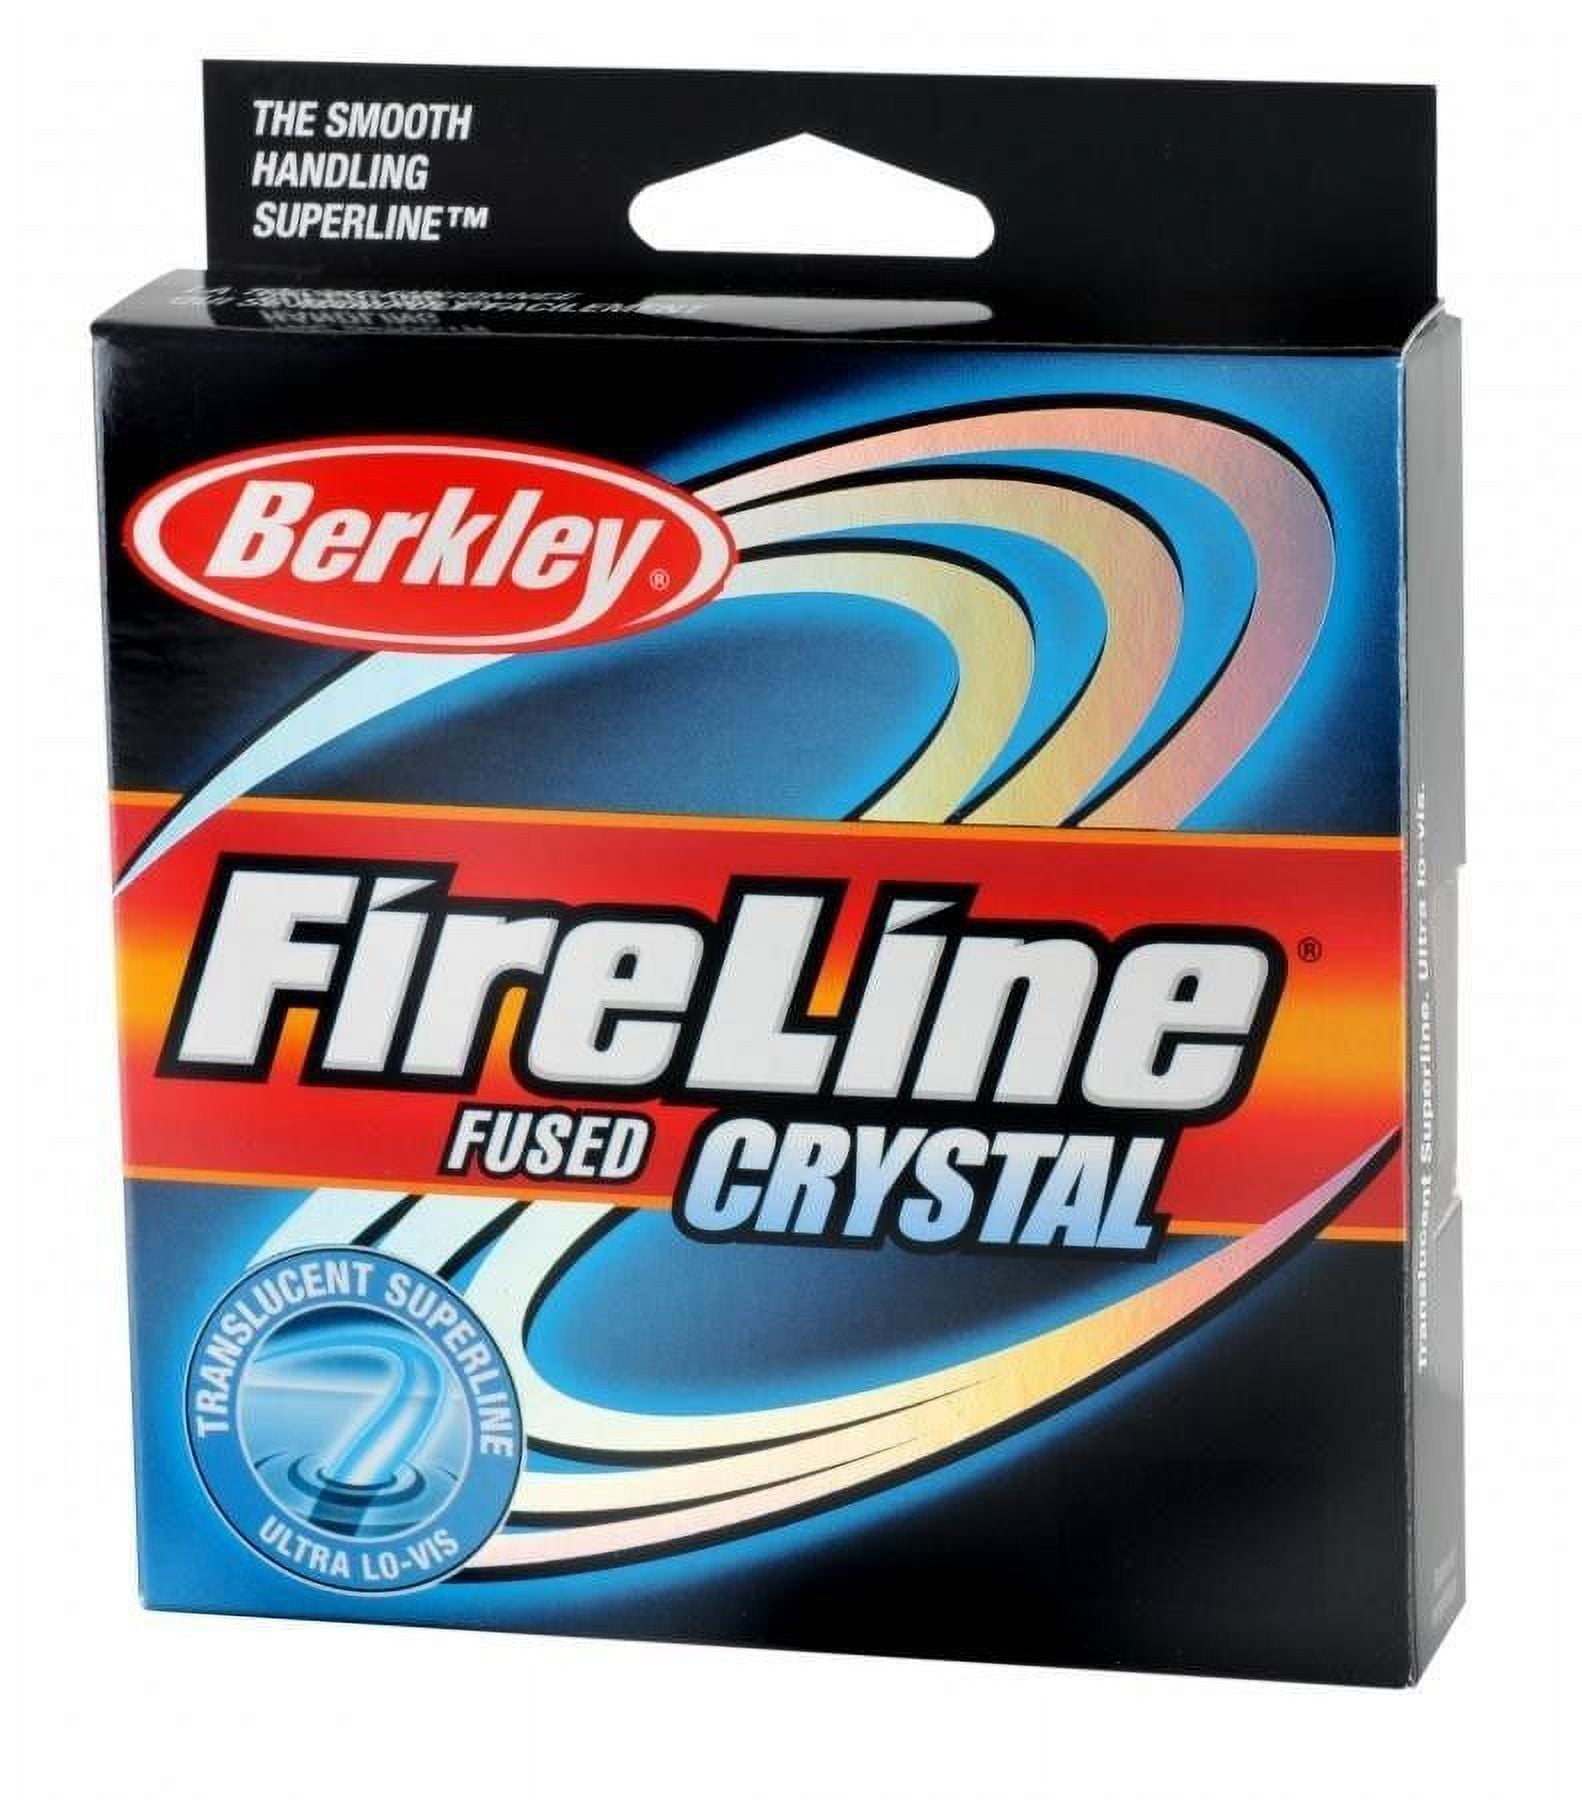 Berkley Fireline® Crystal Braided Super line Fishing Line 4 Lb